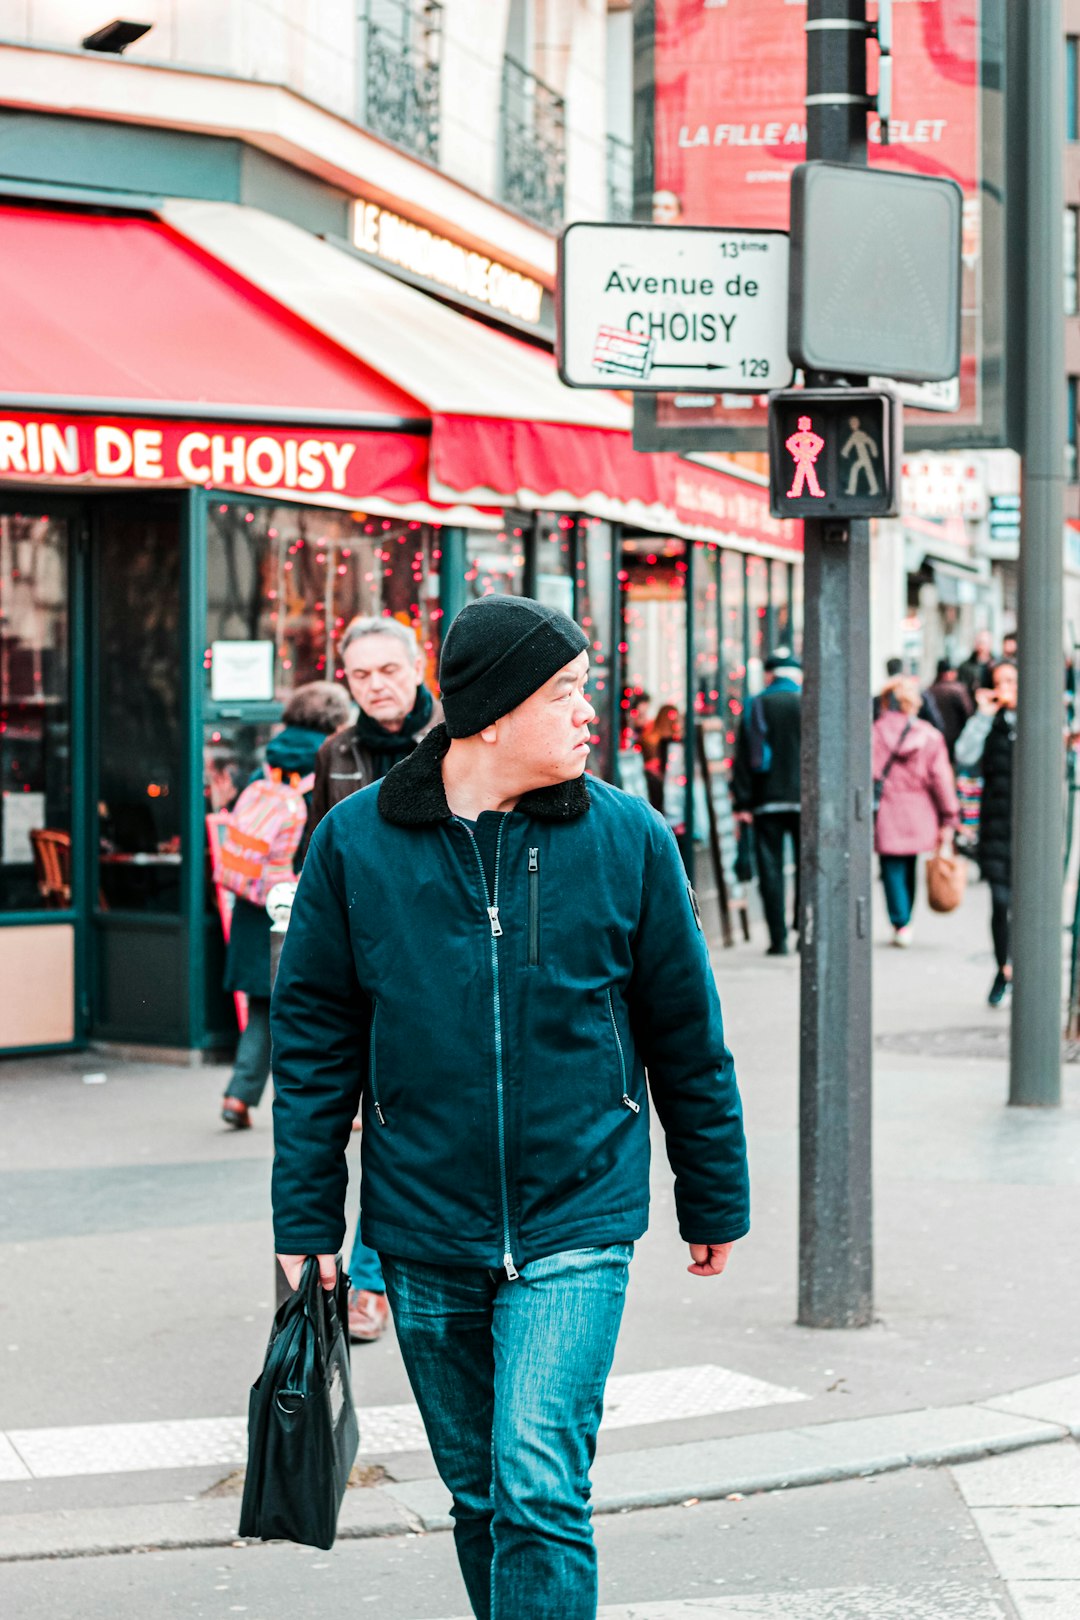 man in red zip up jacket and blue denim jeans walking on sidewalk during daytime